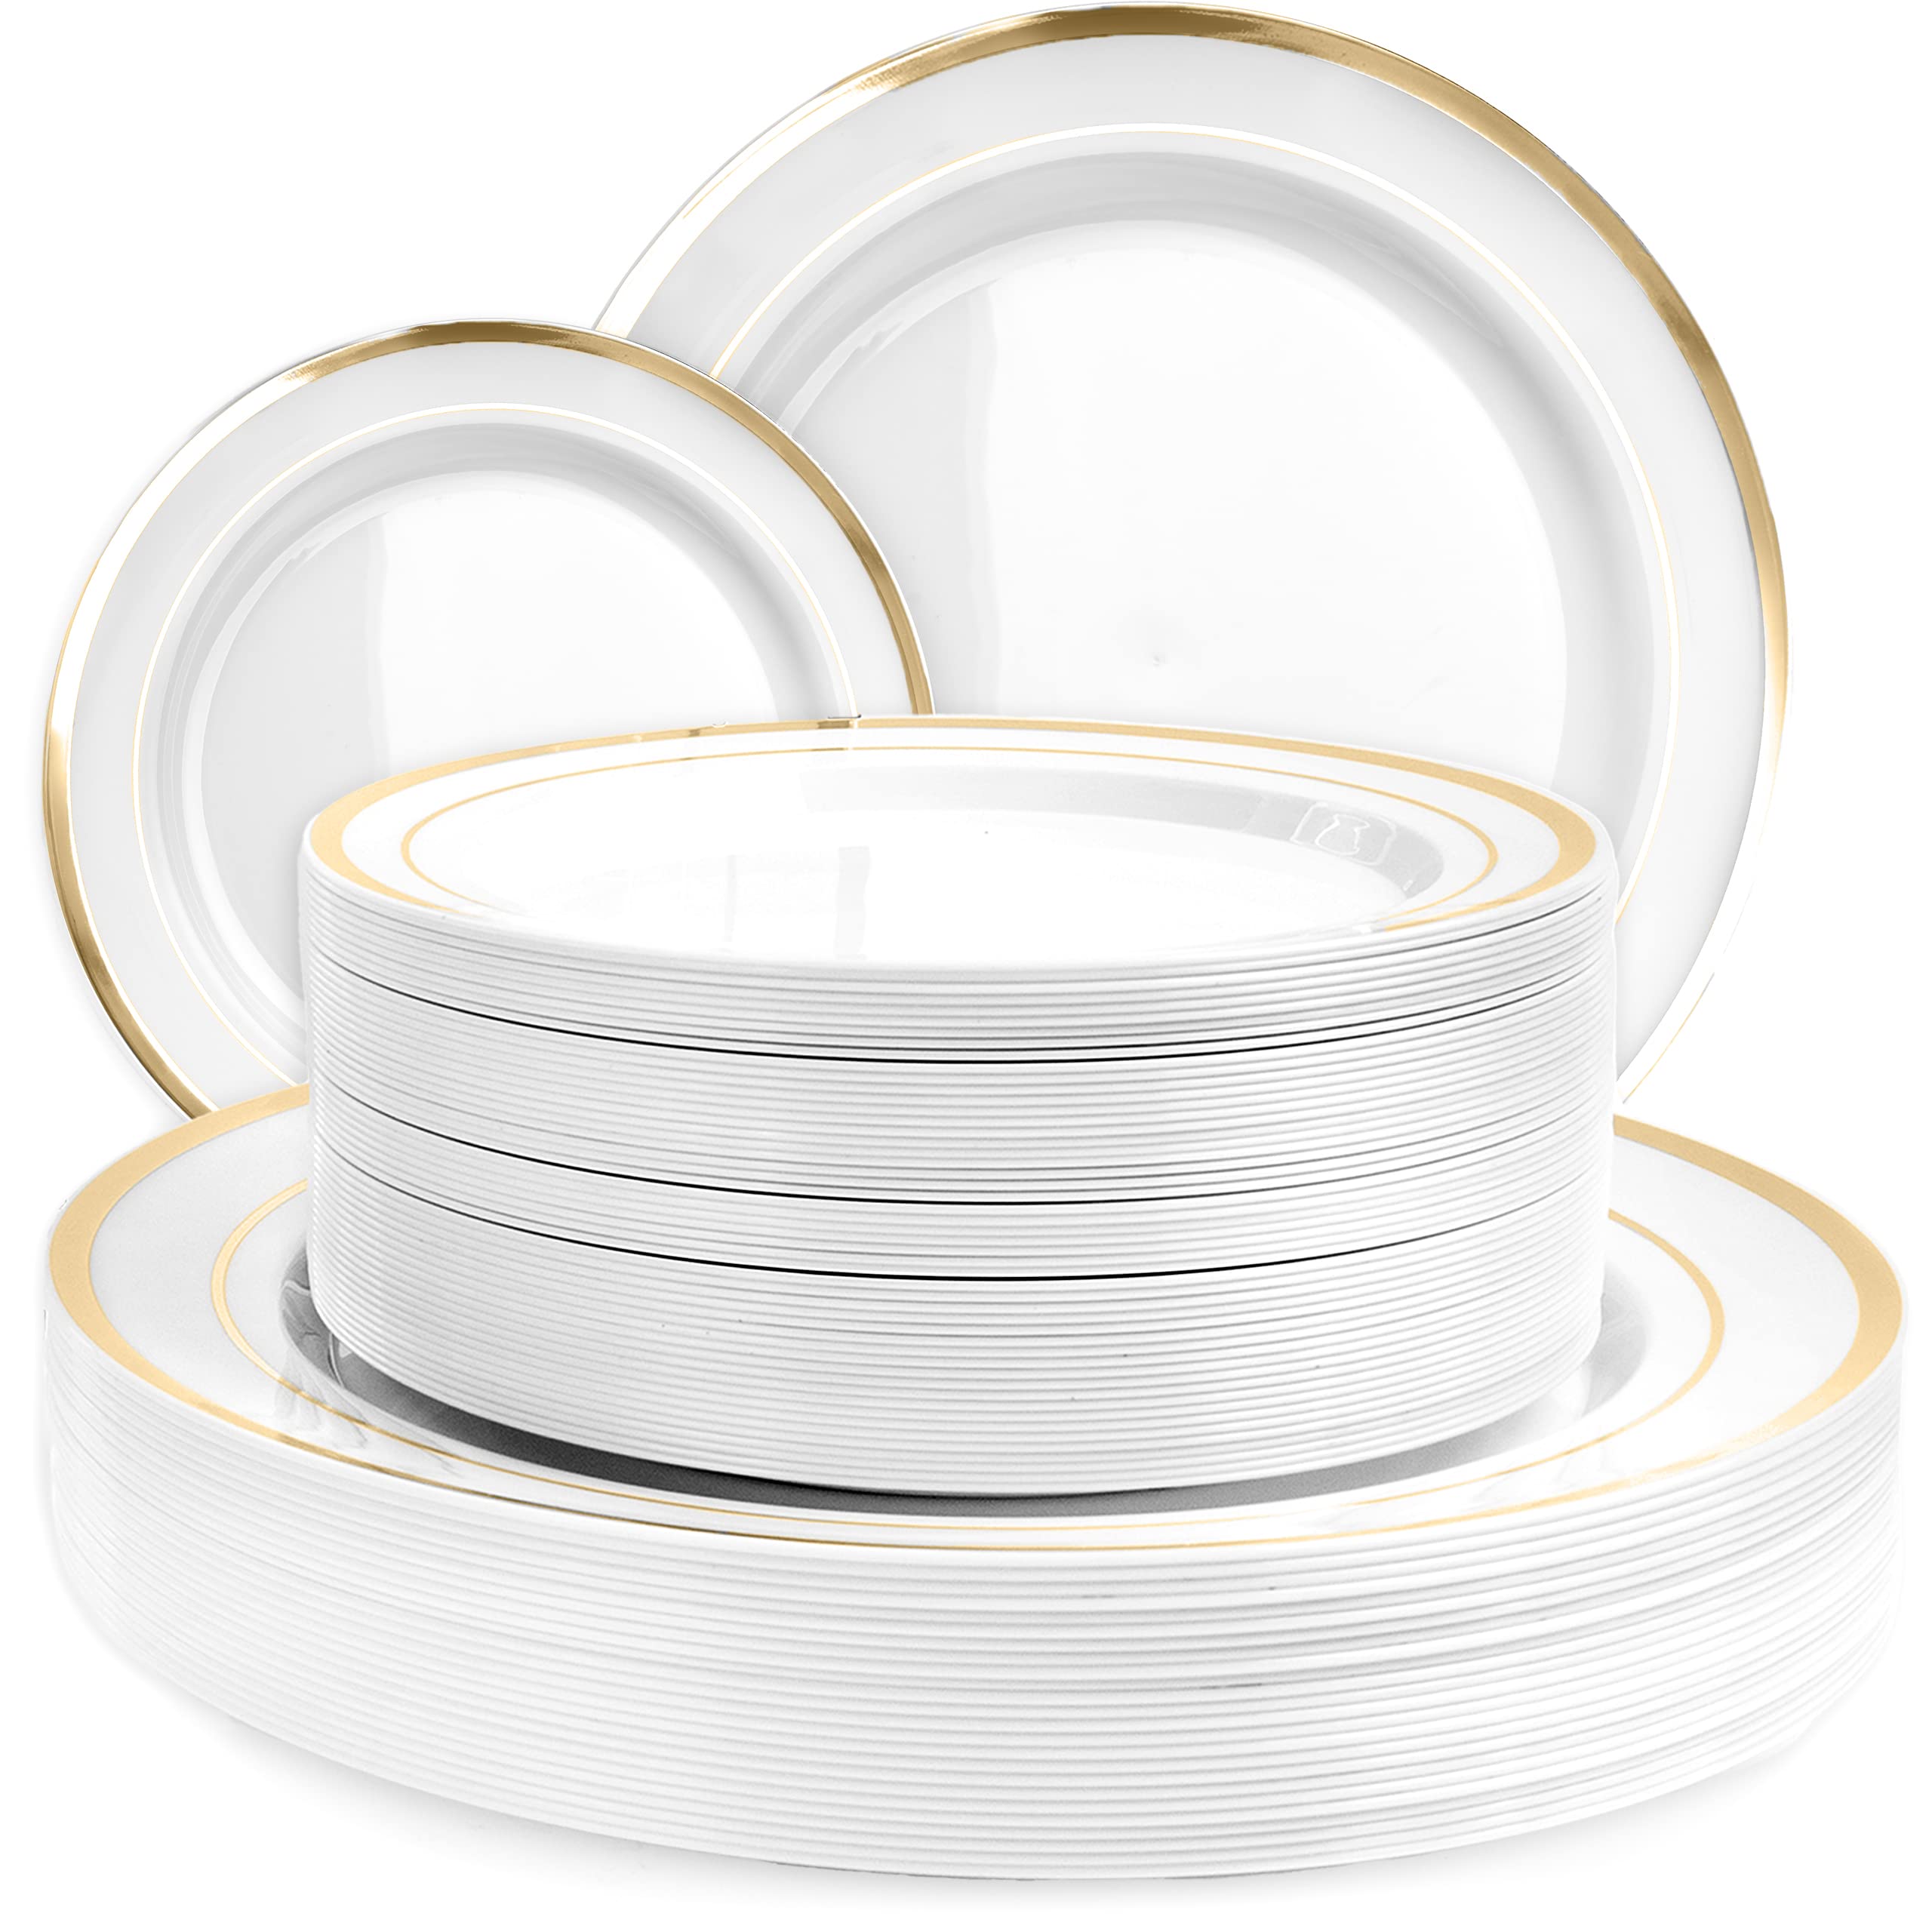 Aya's Cutlery Kingdom 100 White Plastic Plates Disposable with Gold Trim, 50 Plastic Dinner Plates 10.25" + 50 Salad, Dessert, Appetizer Plates 7.5" - Premium Elegant Heavy-Duty Christmas Party Plate  - Good